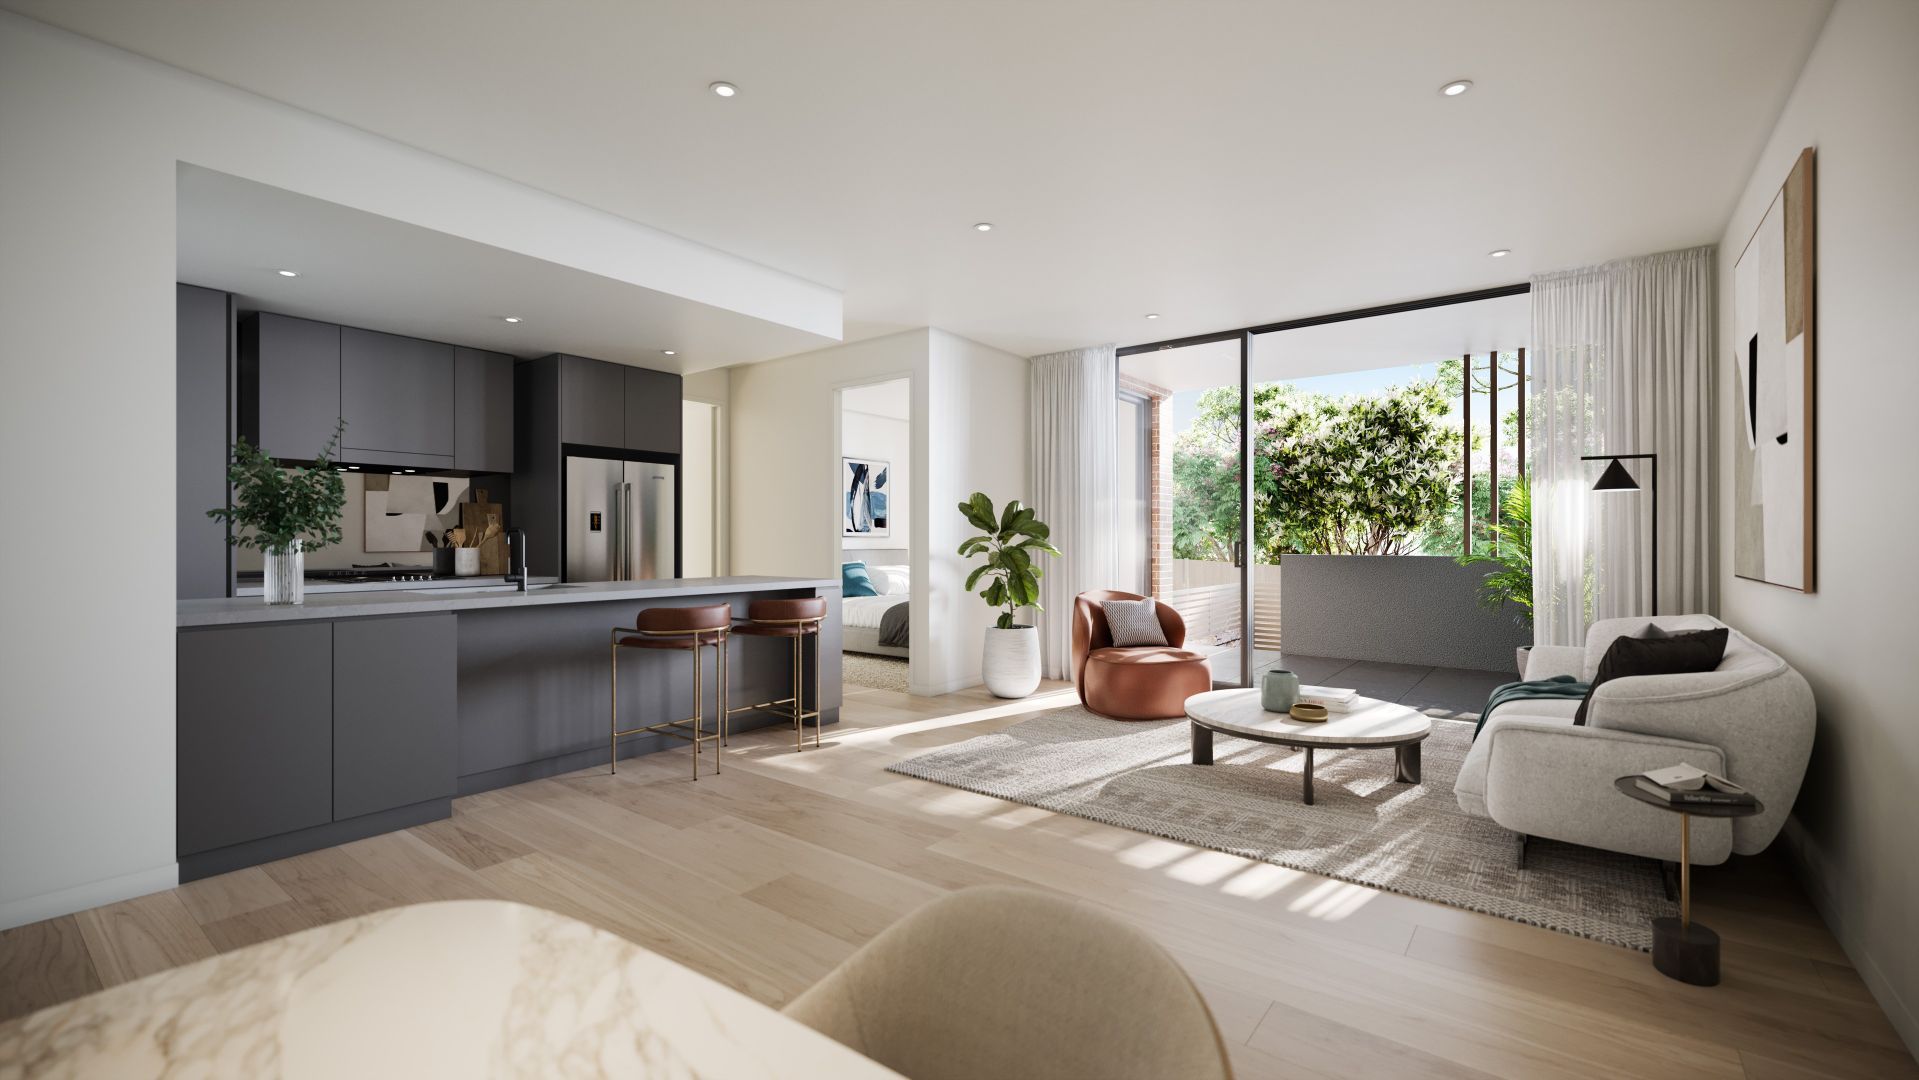 3 bedrooms Apartment / Unit / Flat in CALL TO ARRANGE DISPLAY VIEWING MERRYLANDS NSW, 2160